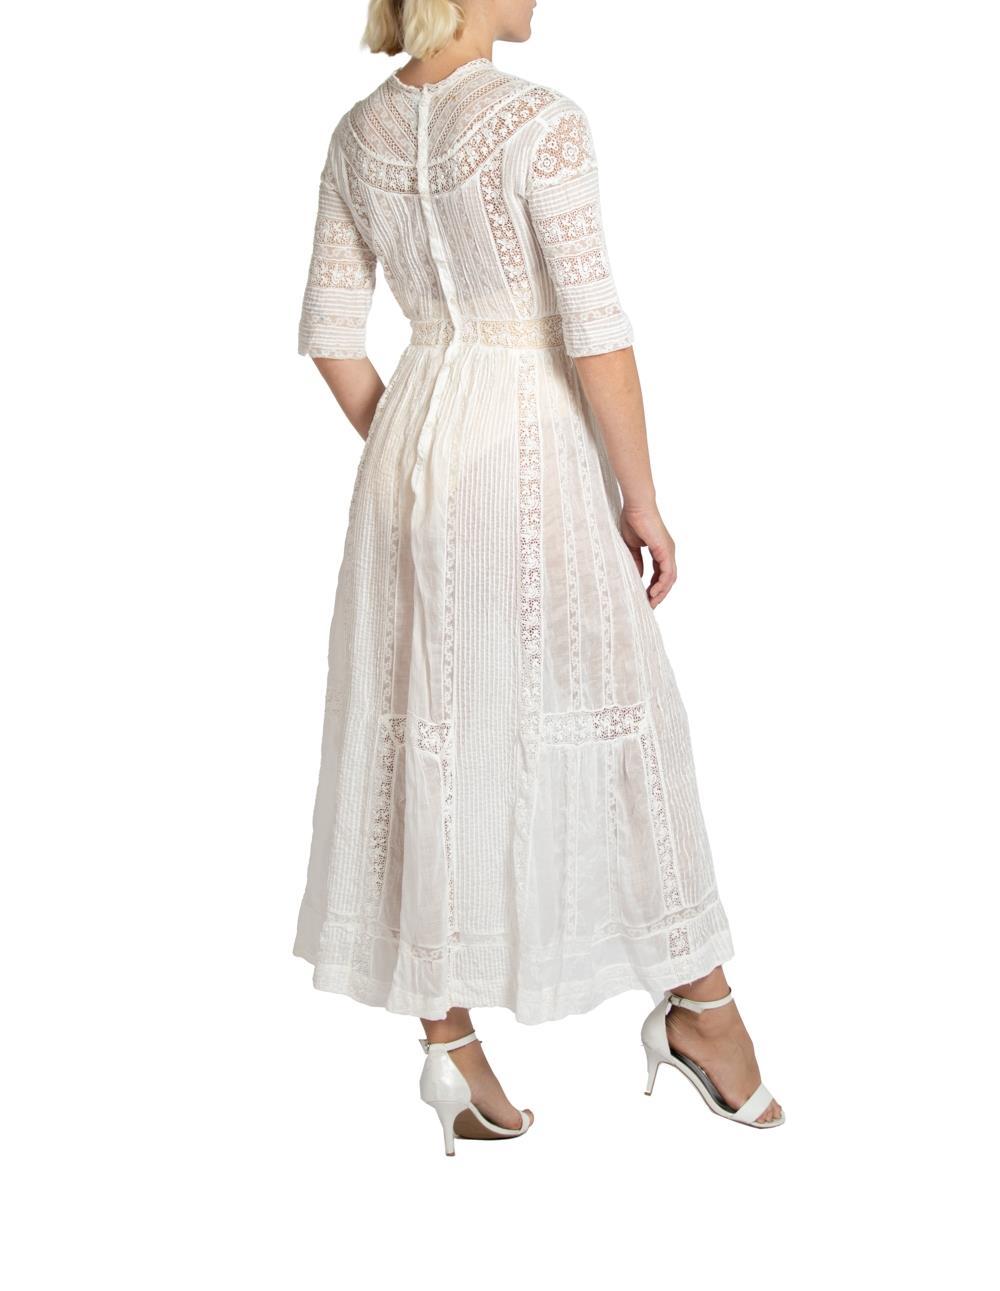 Edwardian White Cotton & Lace Tea Dress With 3-D Flowers For Sale 3